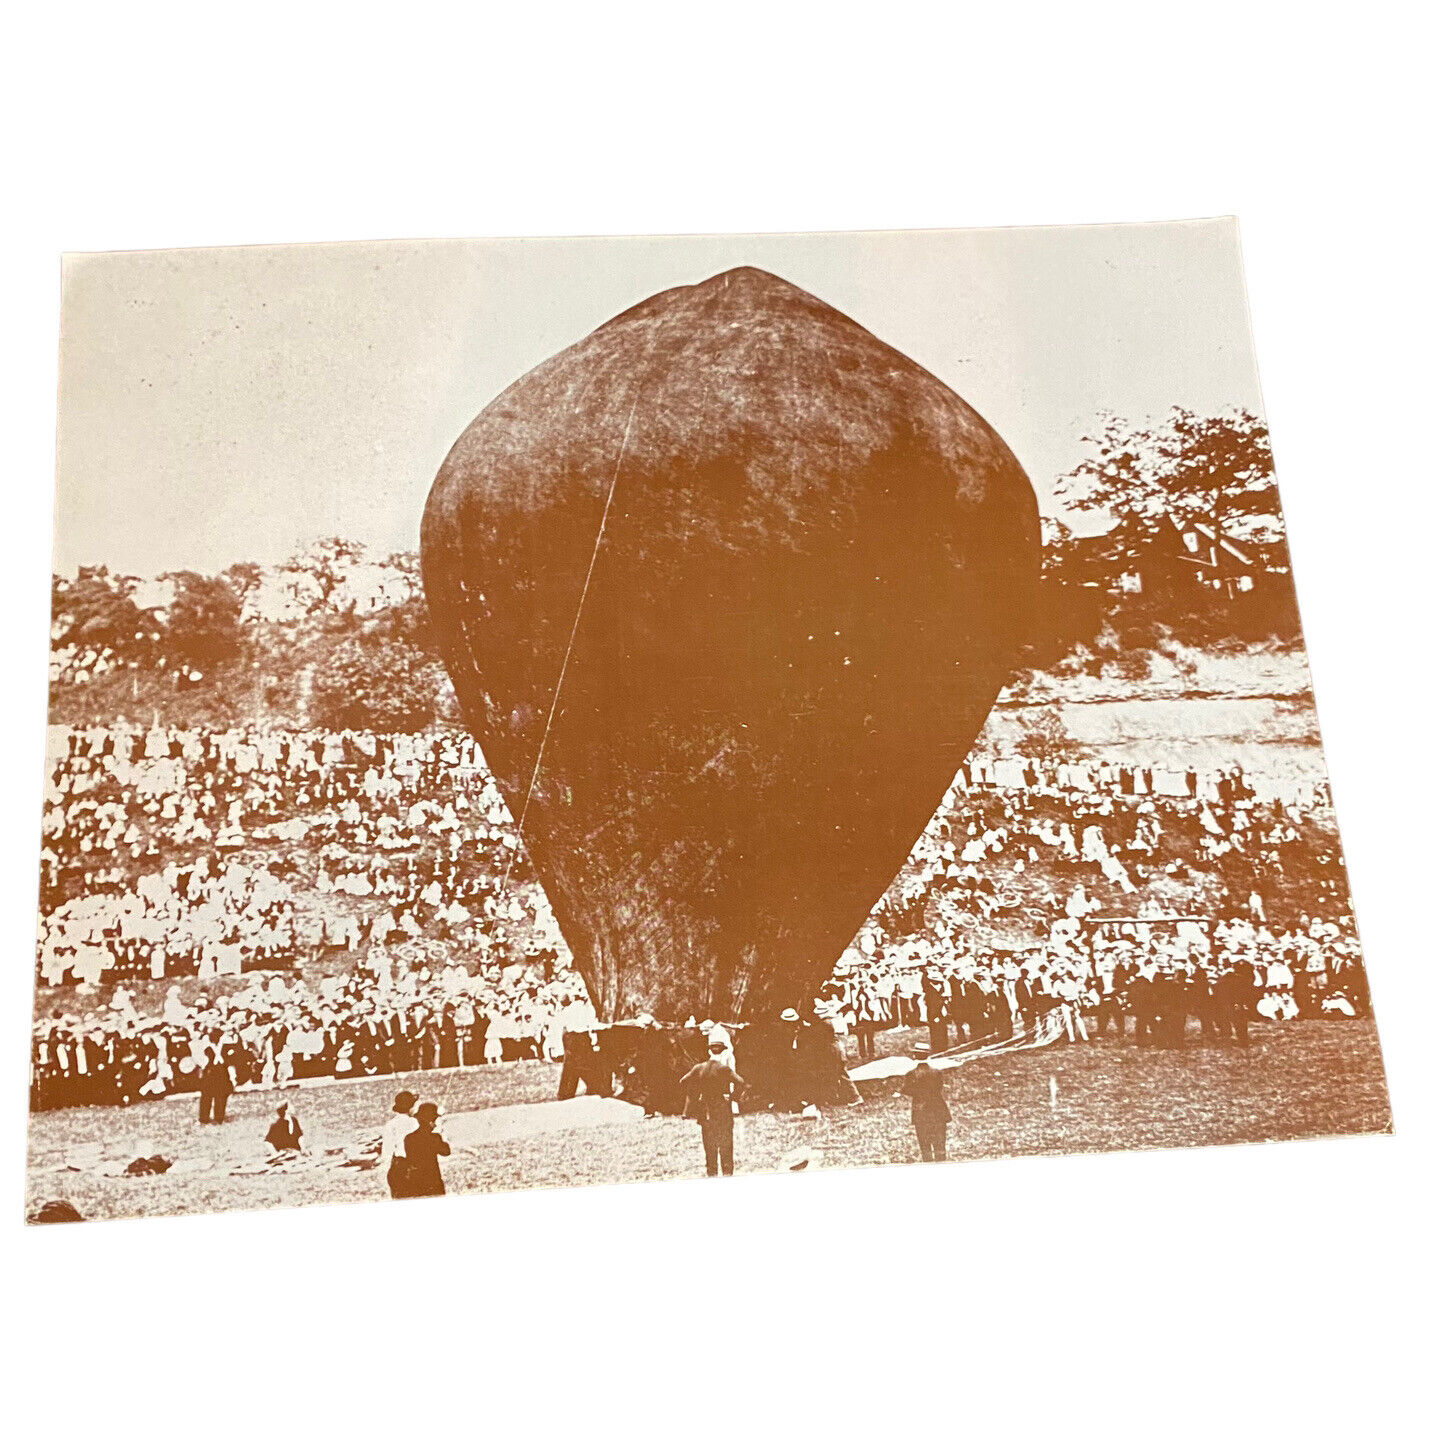 VTG Hot Air Balloon Sepia Tone Poster Photo Reprint Heavy Paper Festival Crowd